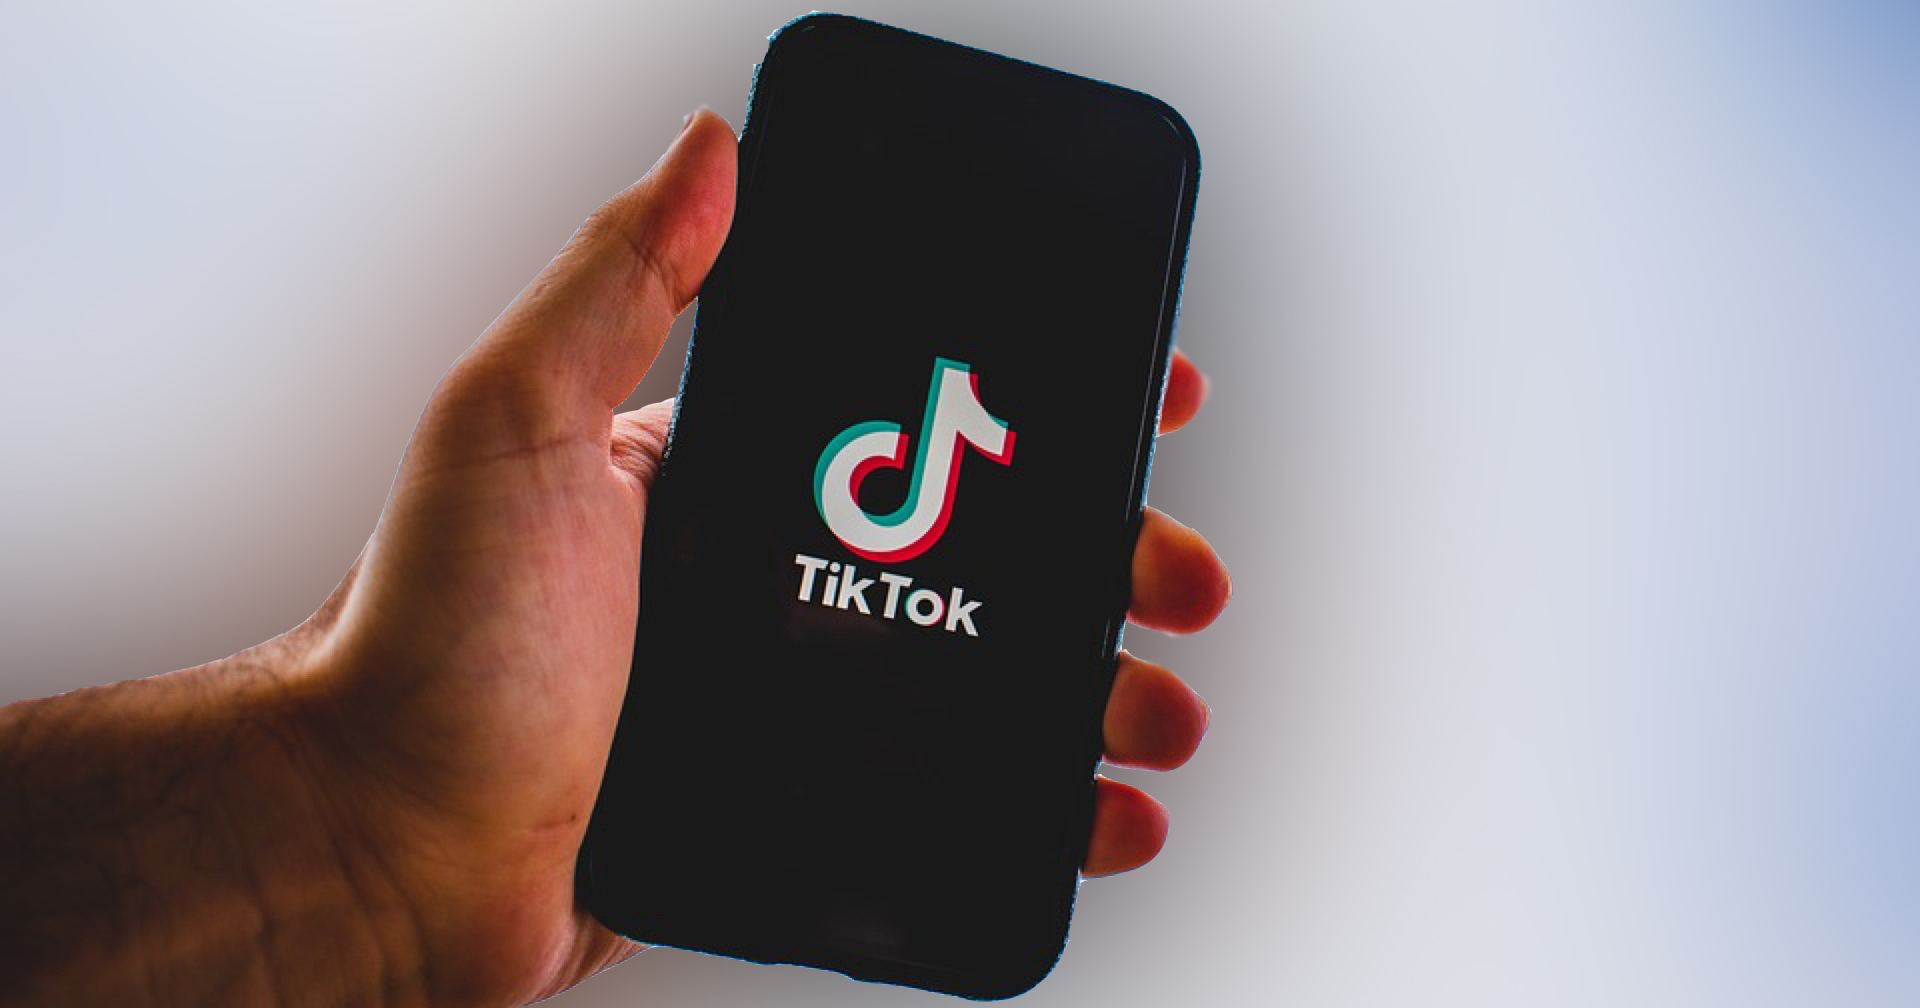 TikTok ความนิยมพุ่งมีผู้เข้าใช้งานกว่า 1,000 ล้านคนทุกเดือน